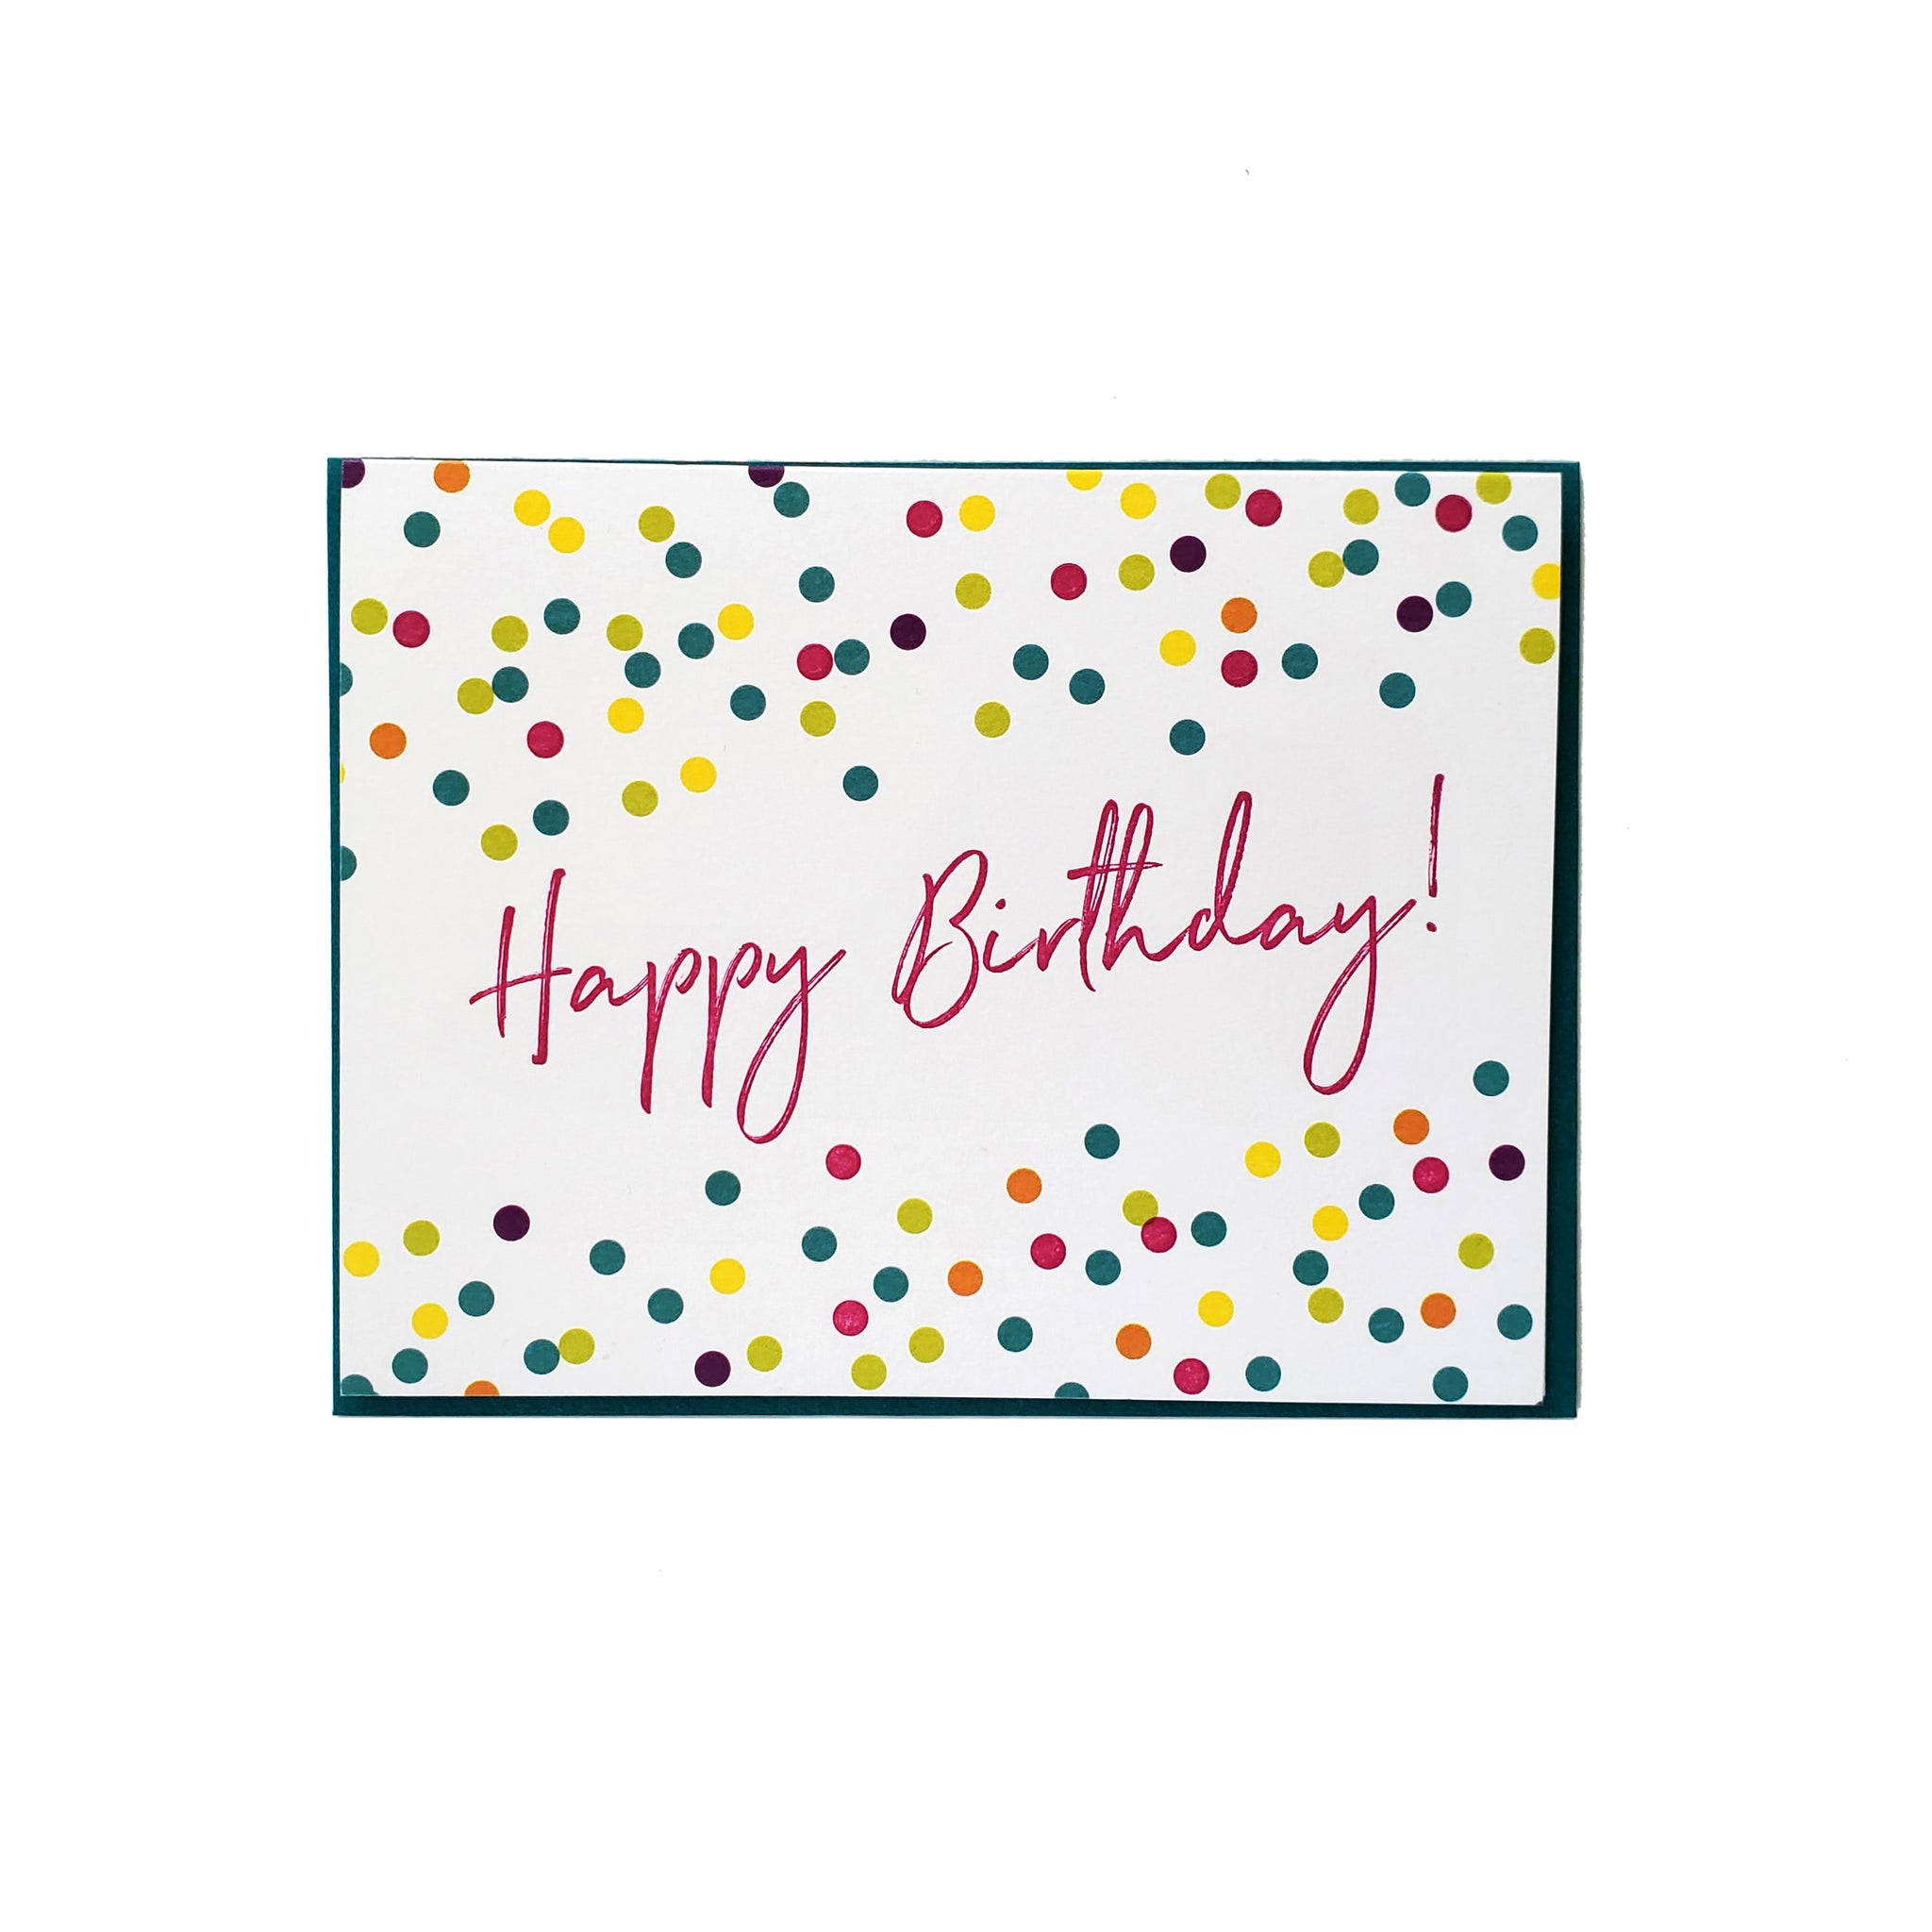 Happy Birthday Confetti, letterpress printed greeting card